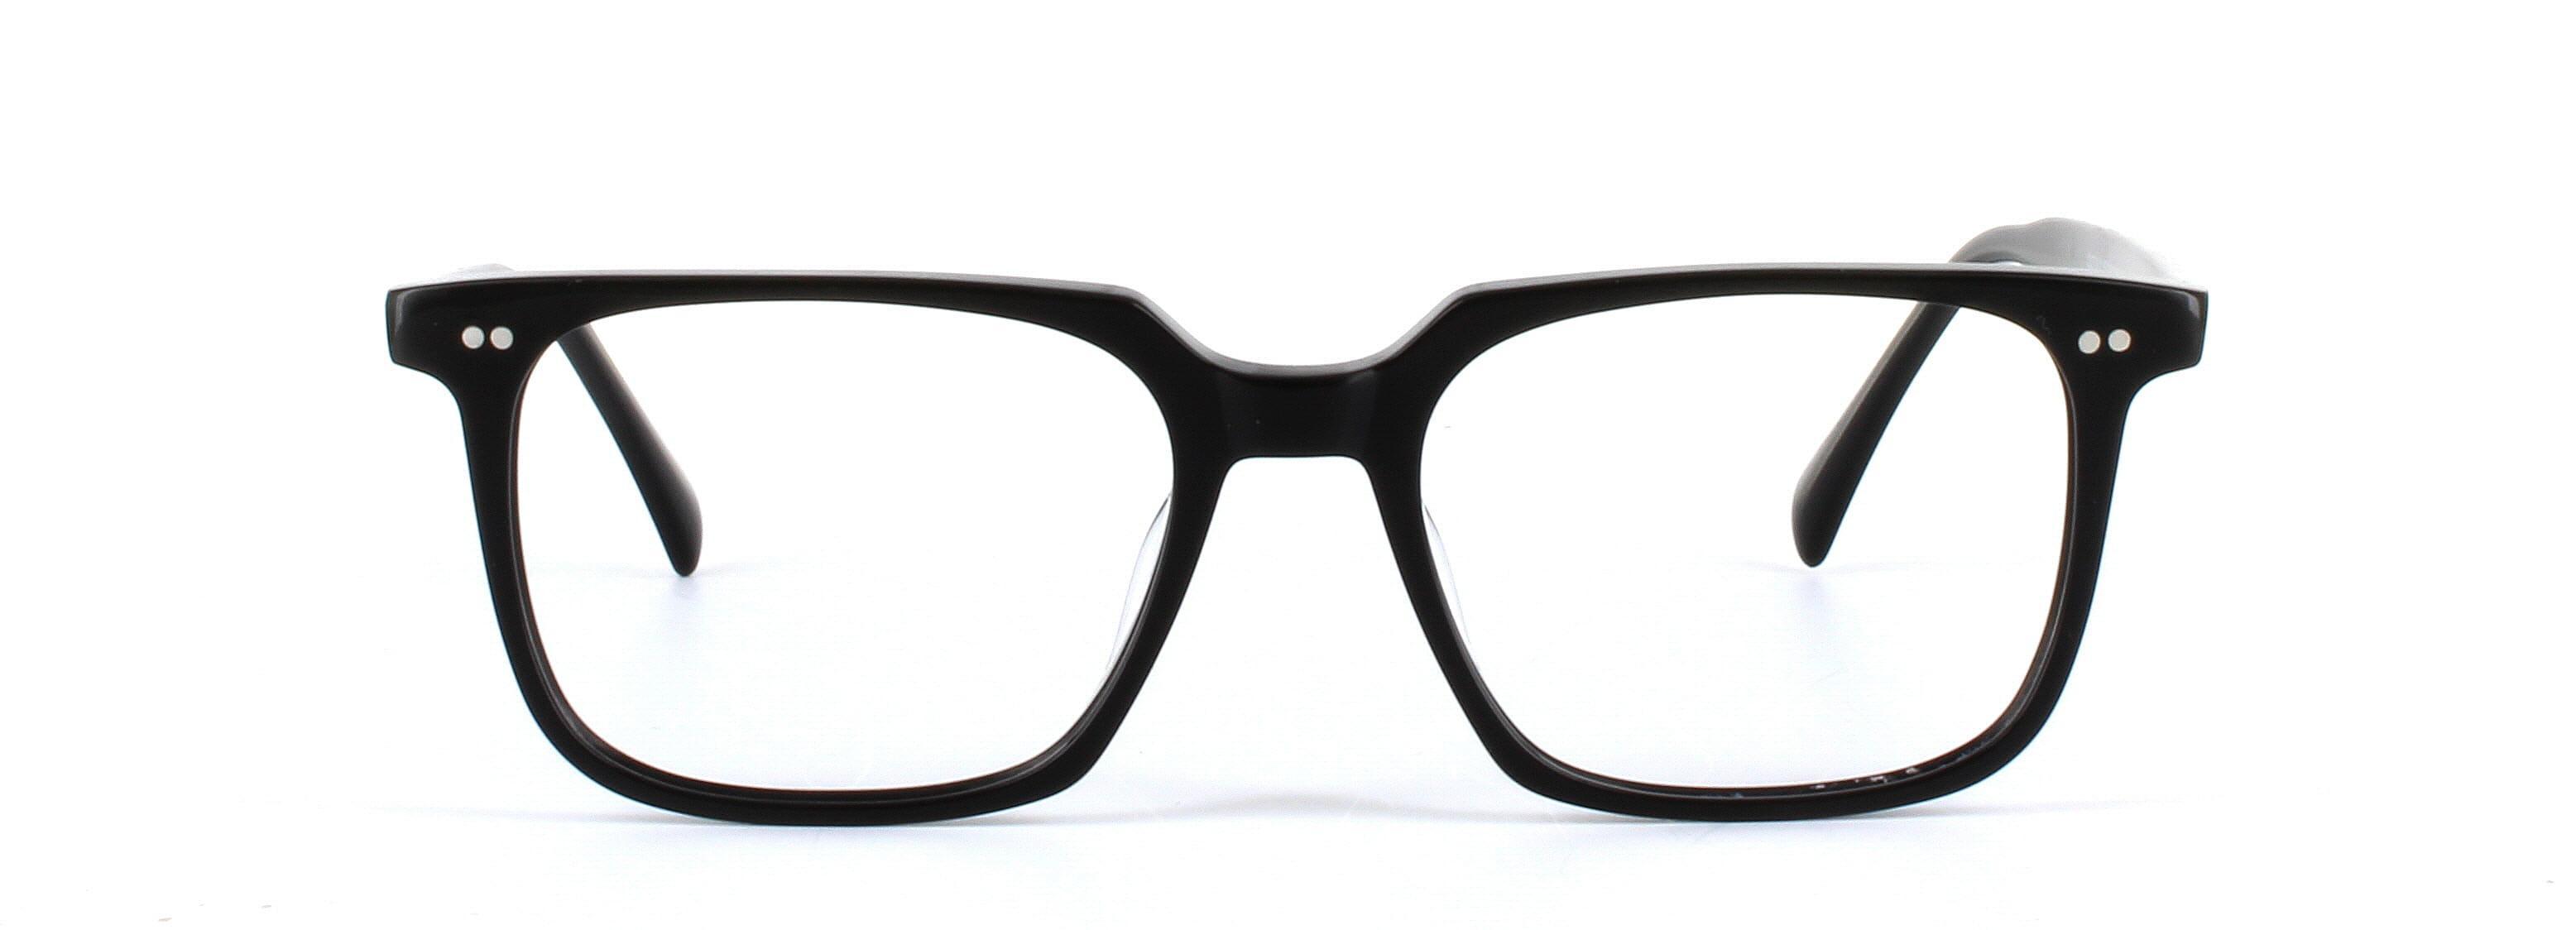 Chilli Black Full Rim Acetate Glasses - Image View 5